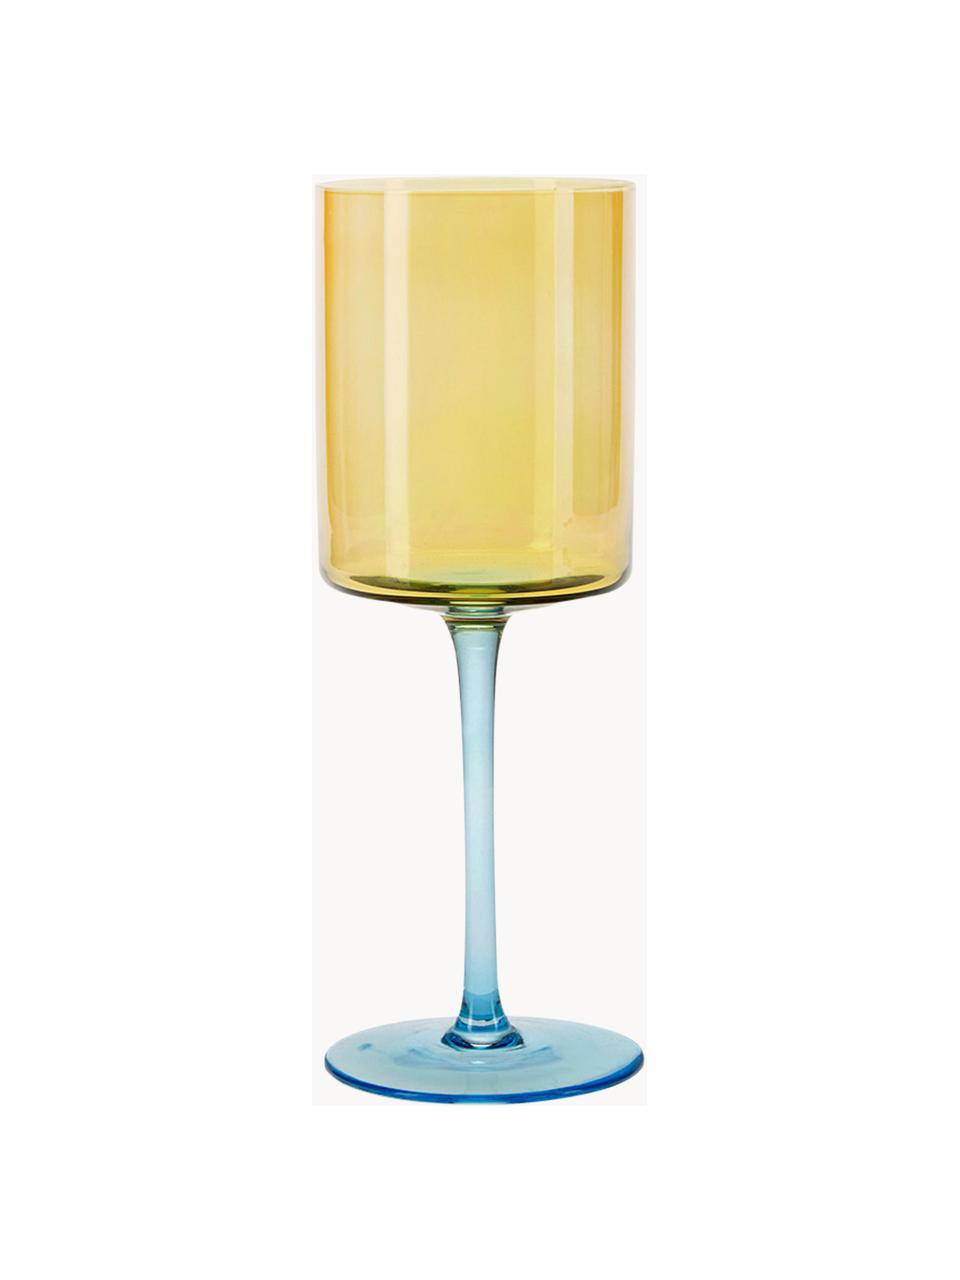 Sklenice na víno Lilly, 2 ks, Sklo, Žlutá, světle modrá, Ø 9 cm, V 24 cm, 430 ml